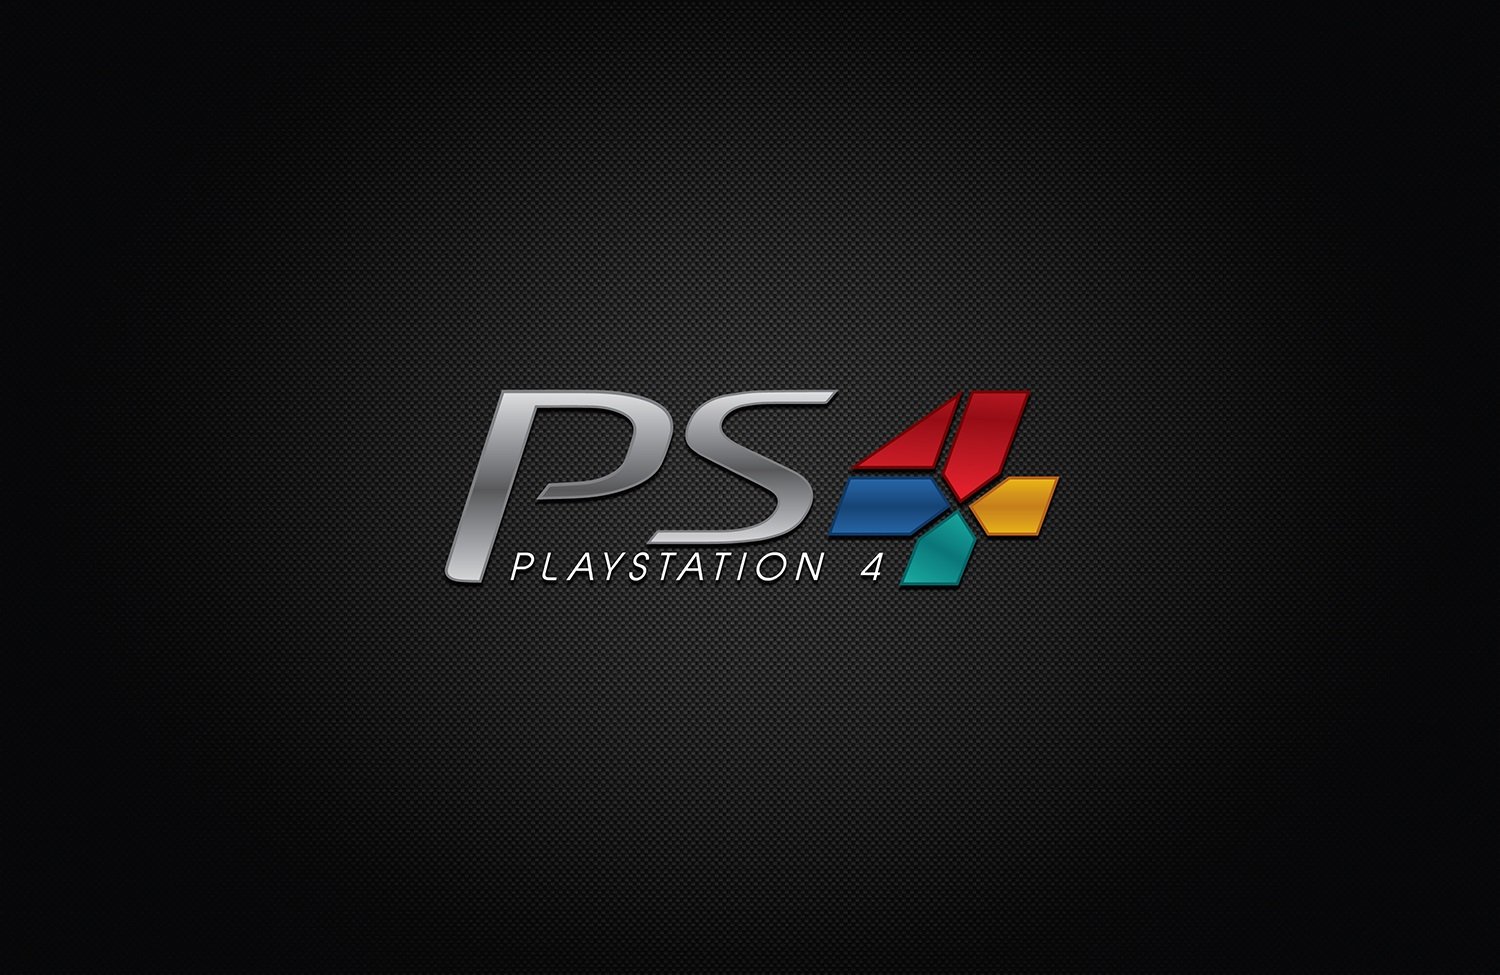 Логотип пс. Логотип плейстейшен 4. Ps3 ps4 logo. PLAYSTATION надпись. Надпись PLAYSTATION 3.